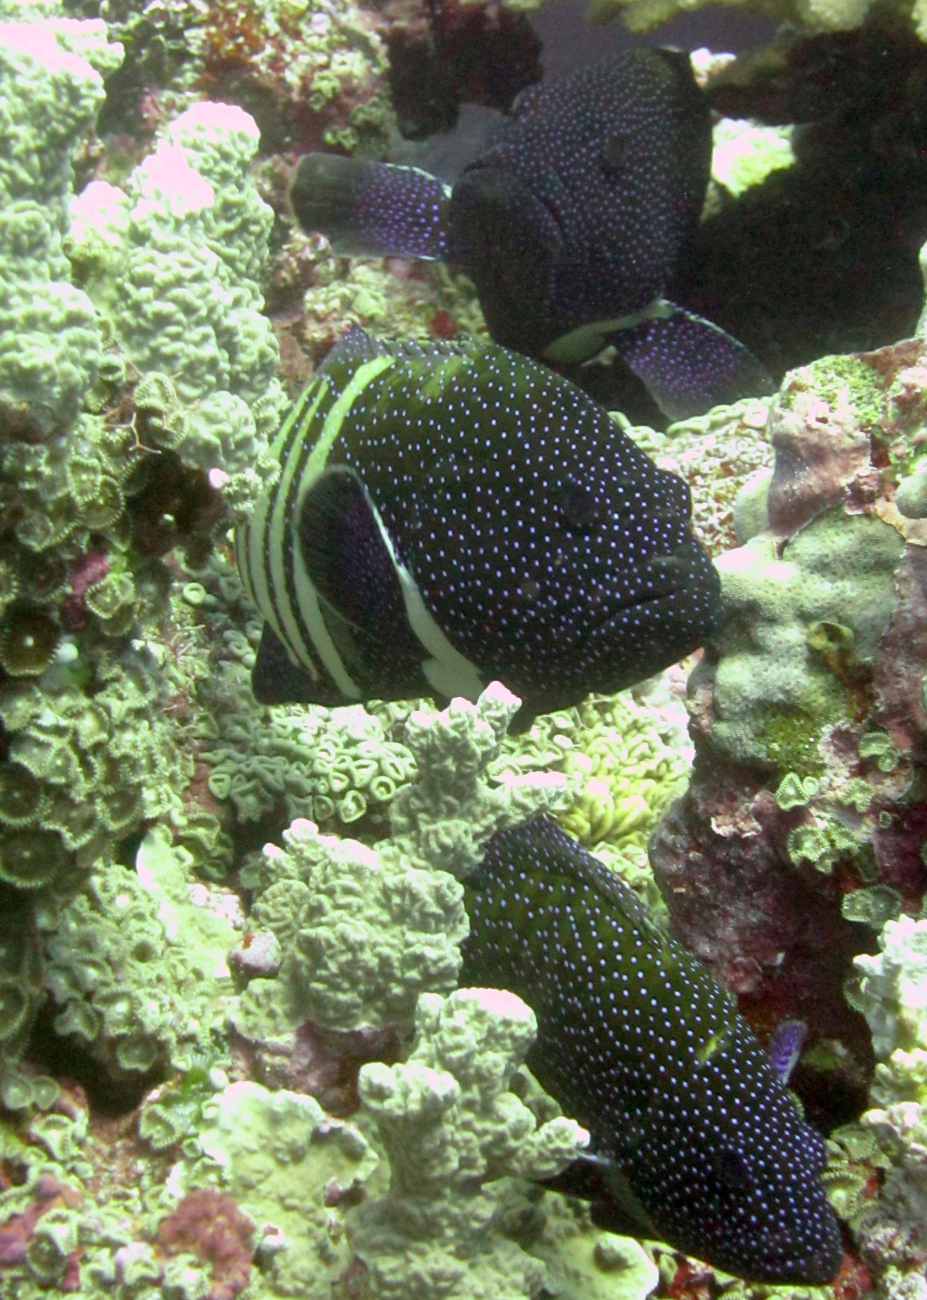 Peacock groupers (Cephalopholis argus)